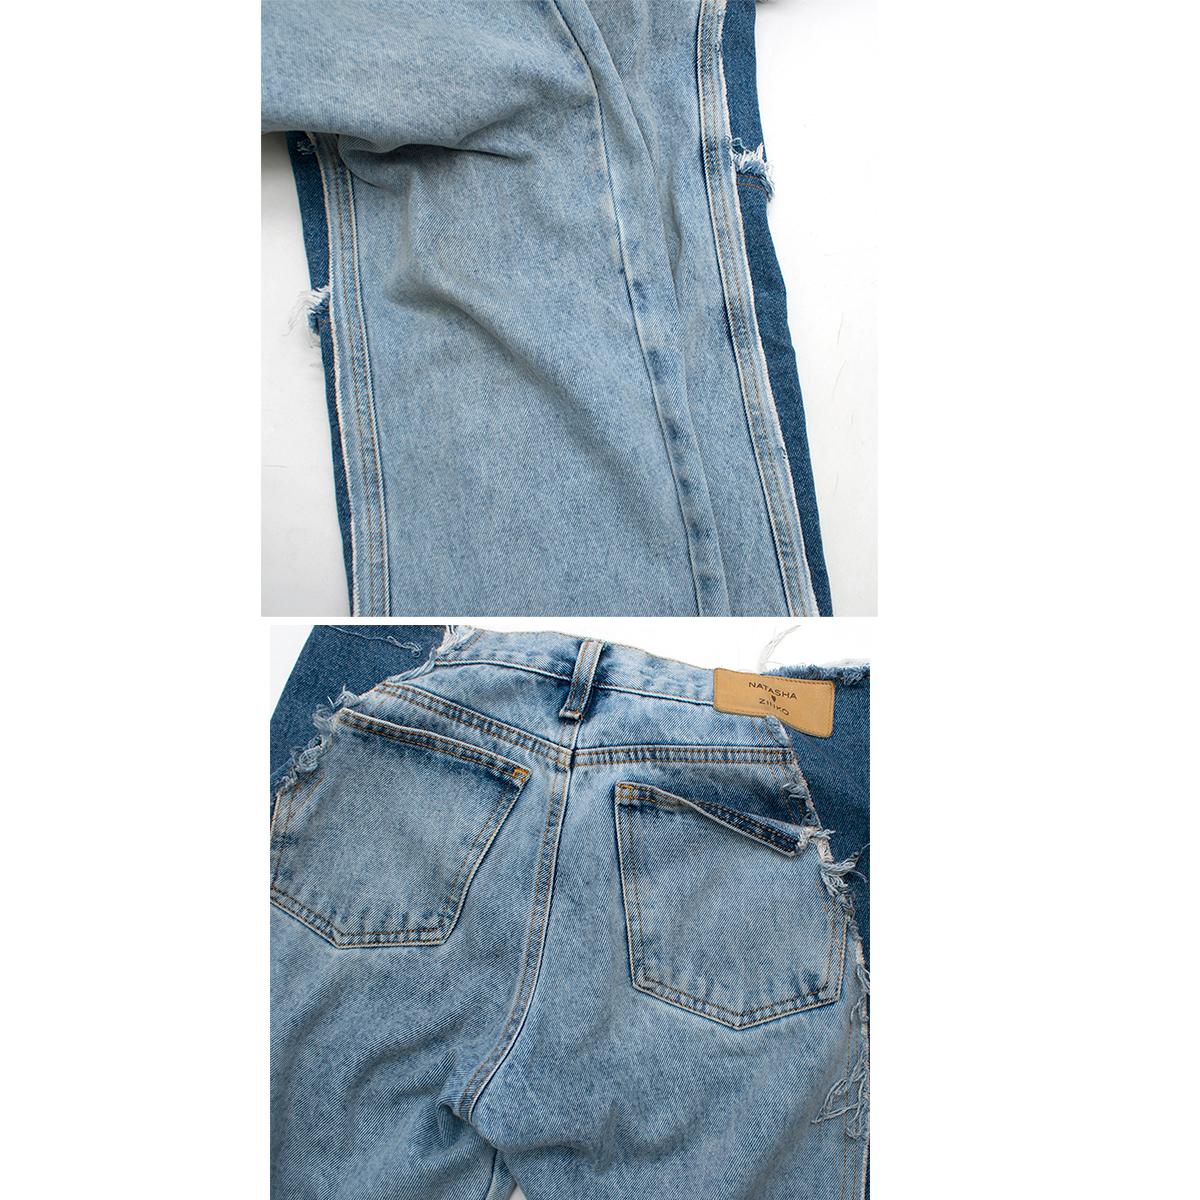 Natasha Zinko Two-Tone Distressed Cropped Jeans US 4 For Sale 5